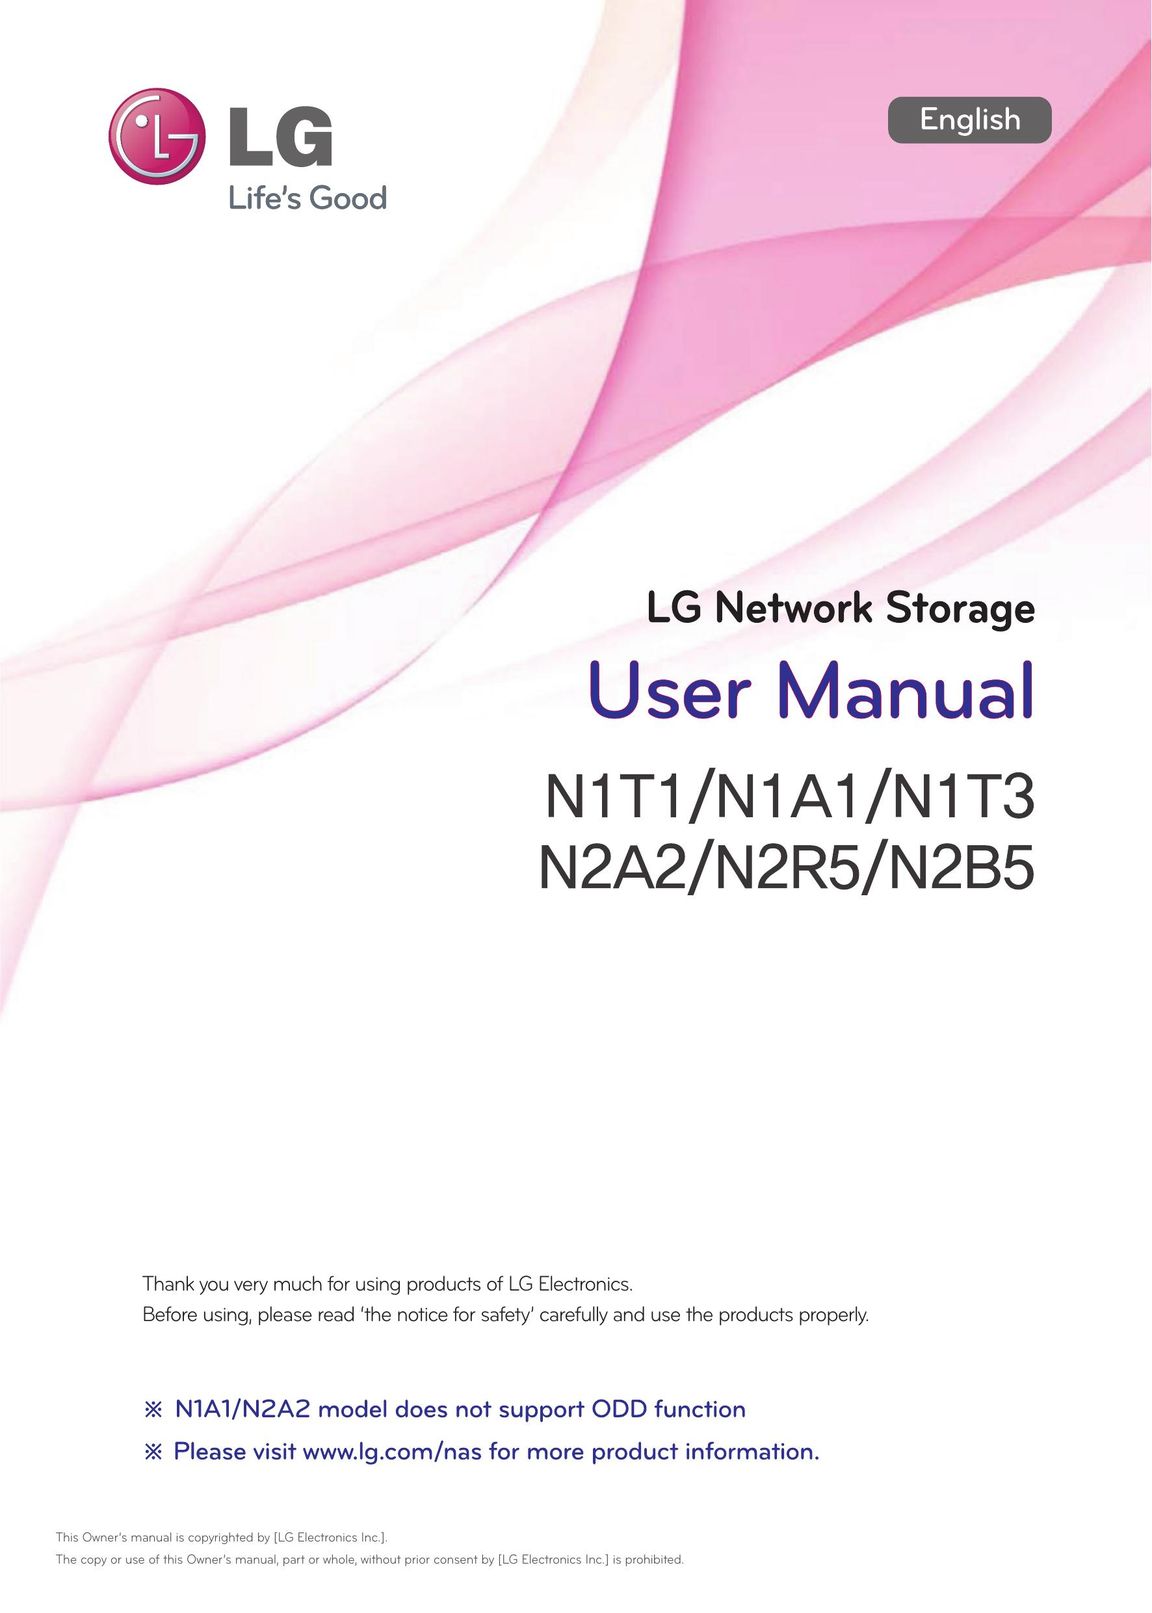 LG Electronics N2A2 Network Hardware User Manual